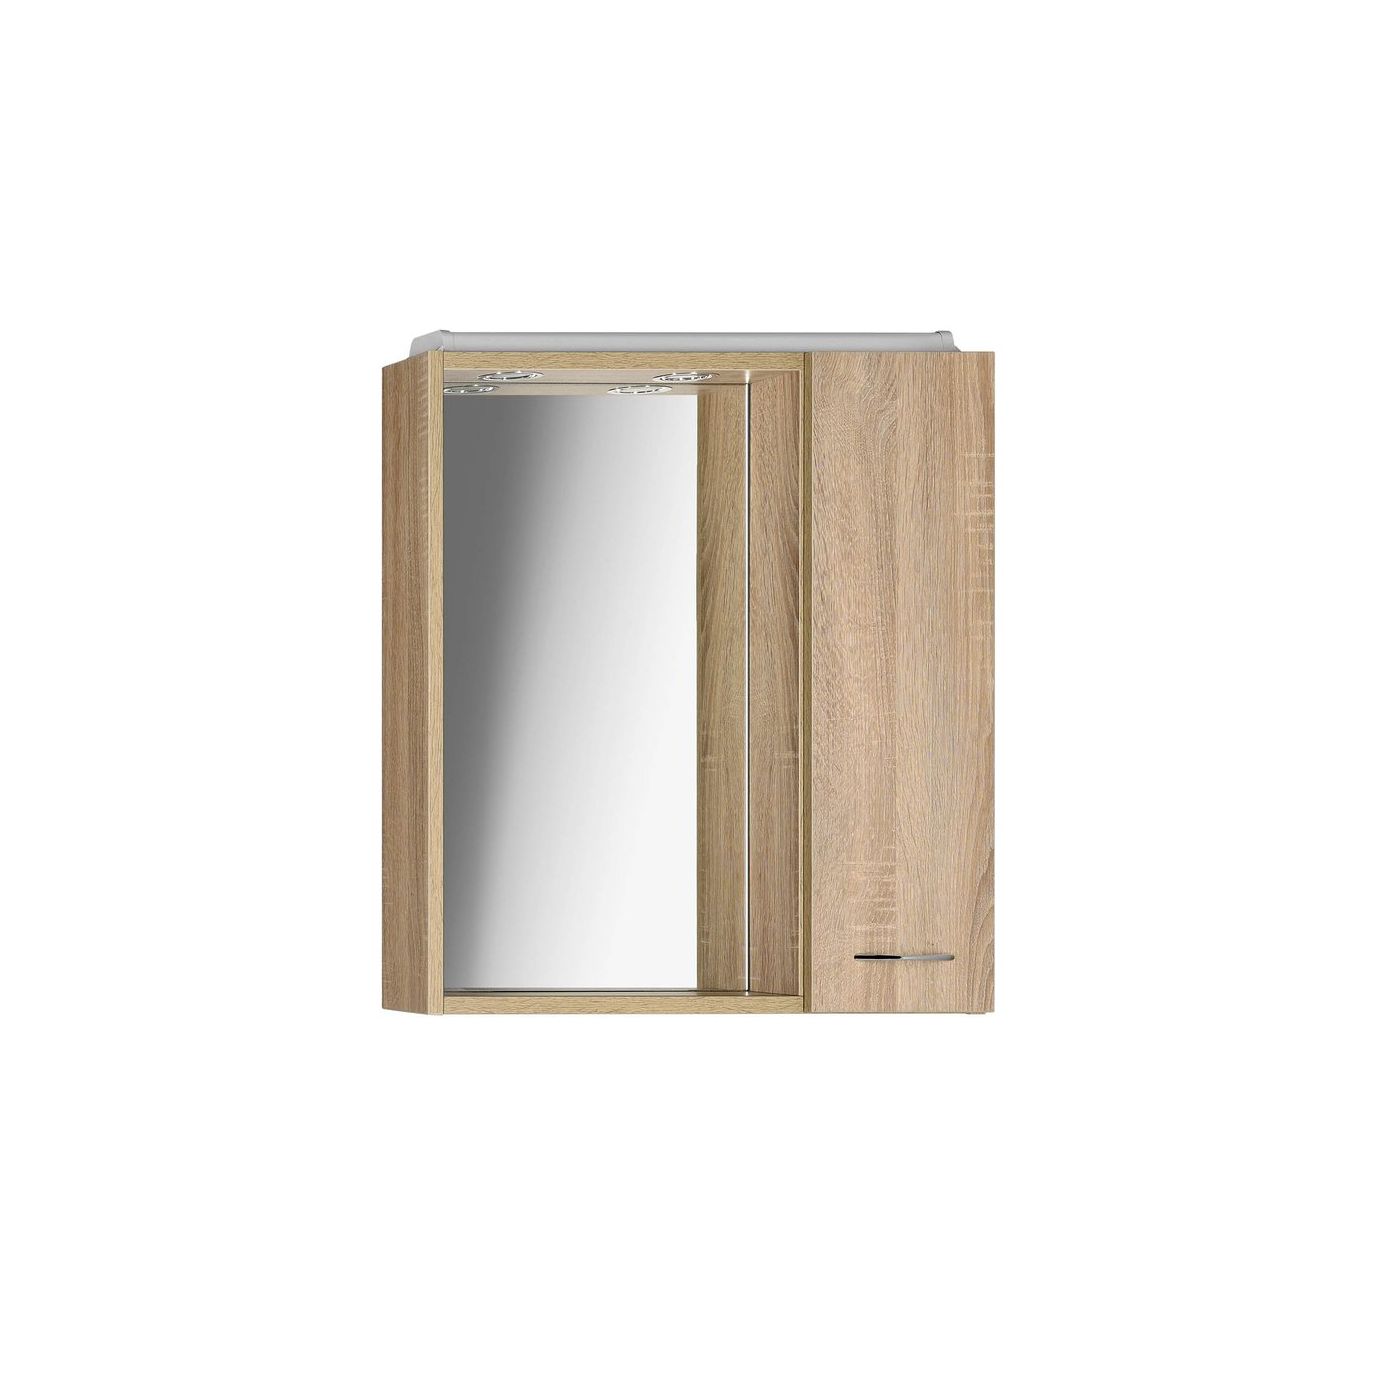 Aqualine Keramia Fresh LED-spiegelkast rechts 60x60cm oak platin